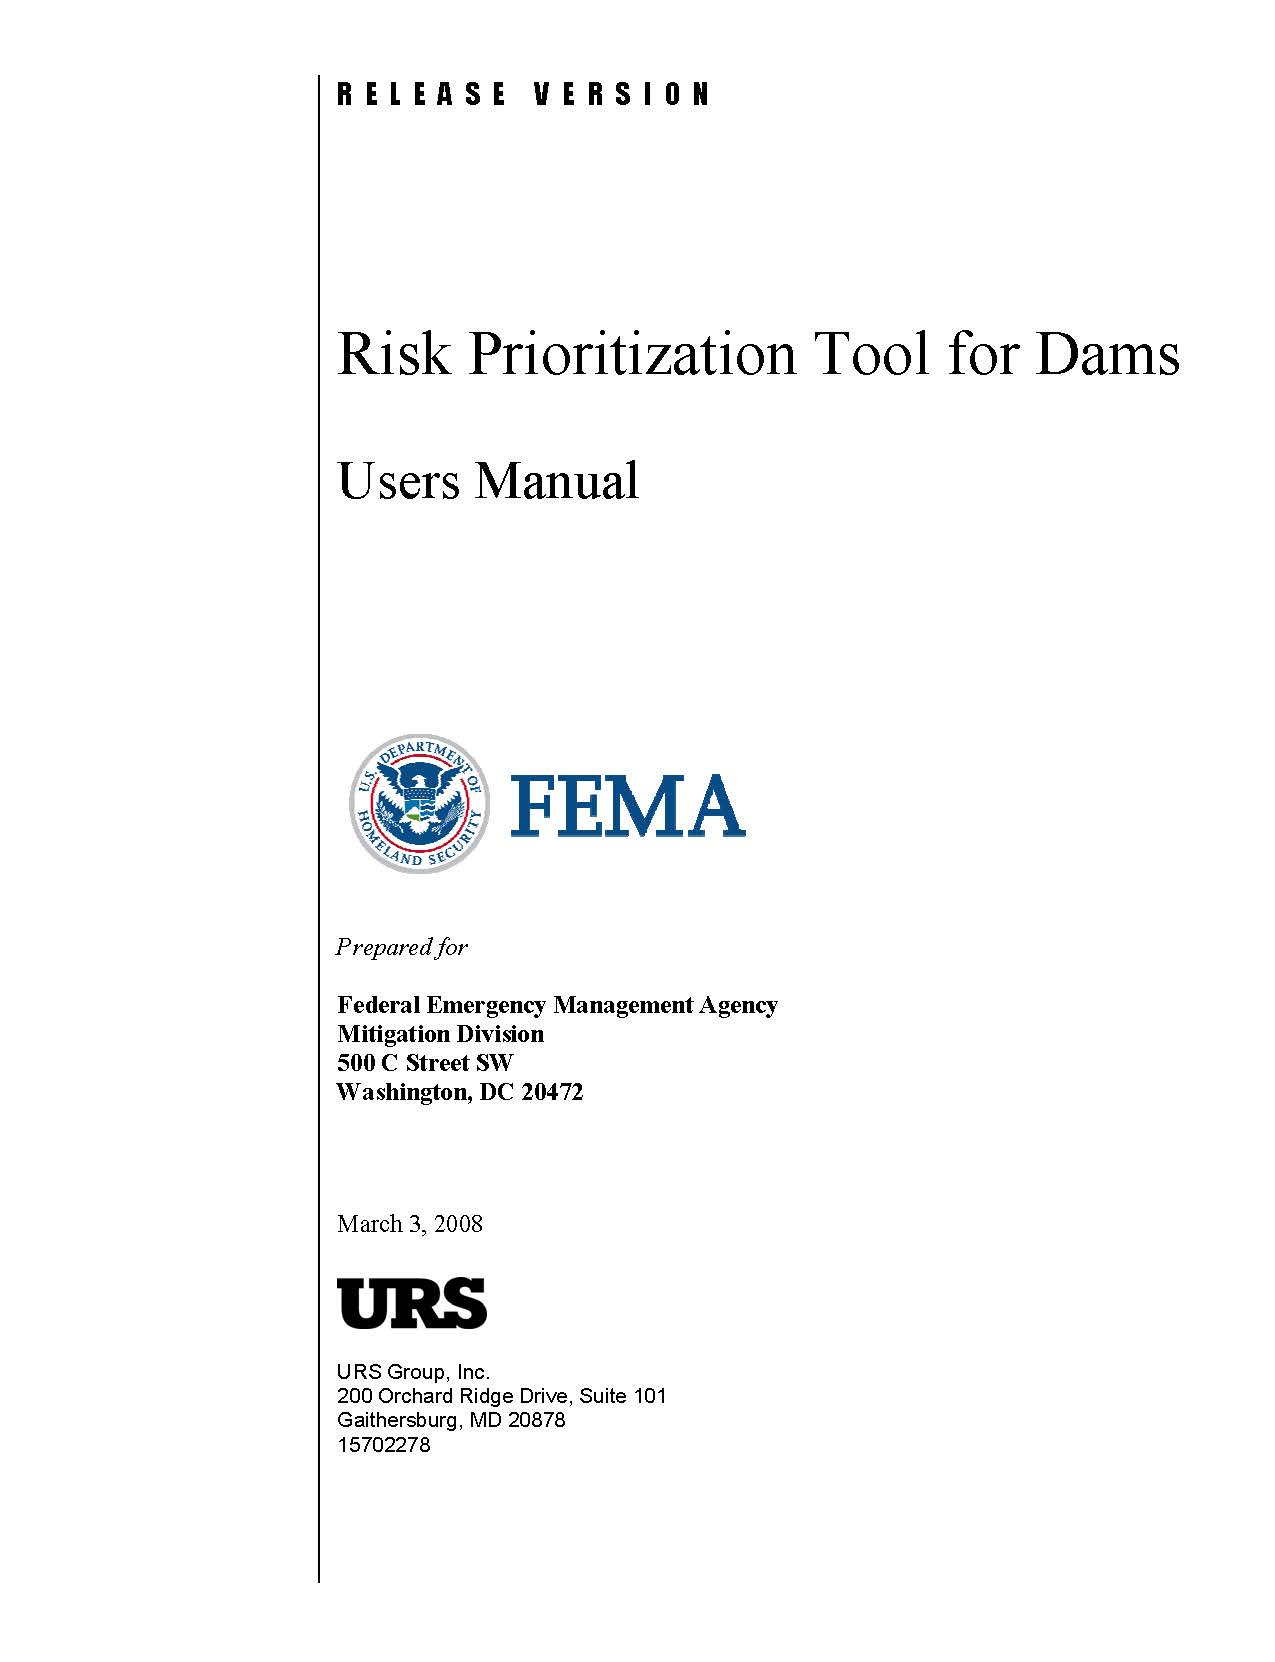 FEMA RiskPrioritizationManual2008.jpg